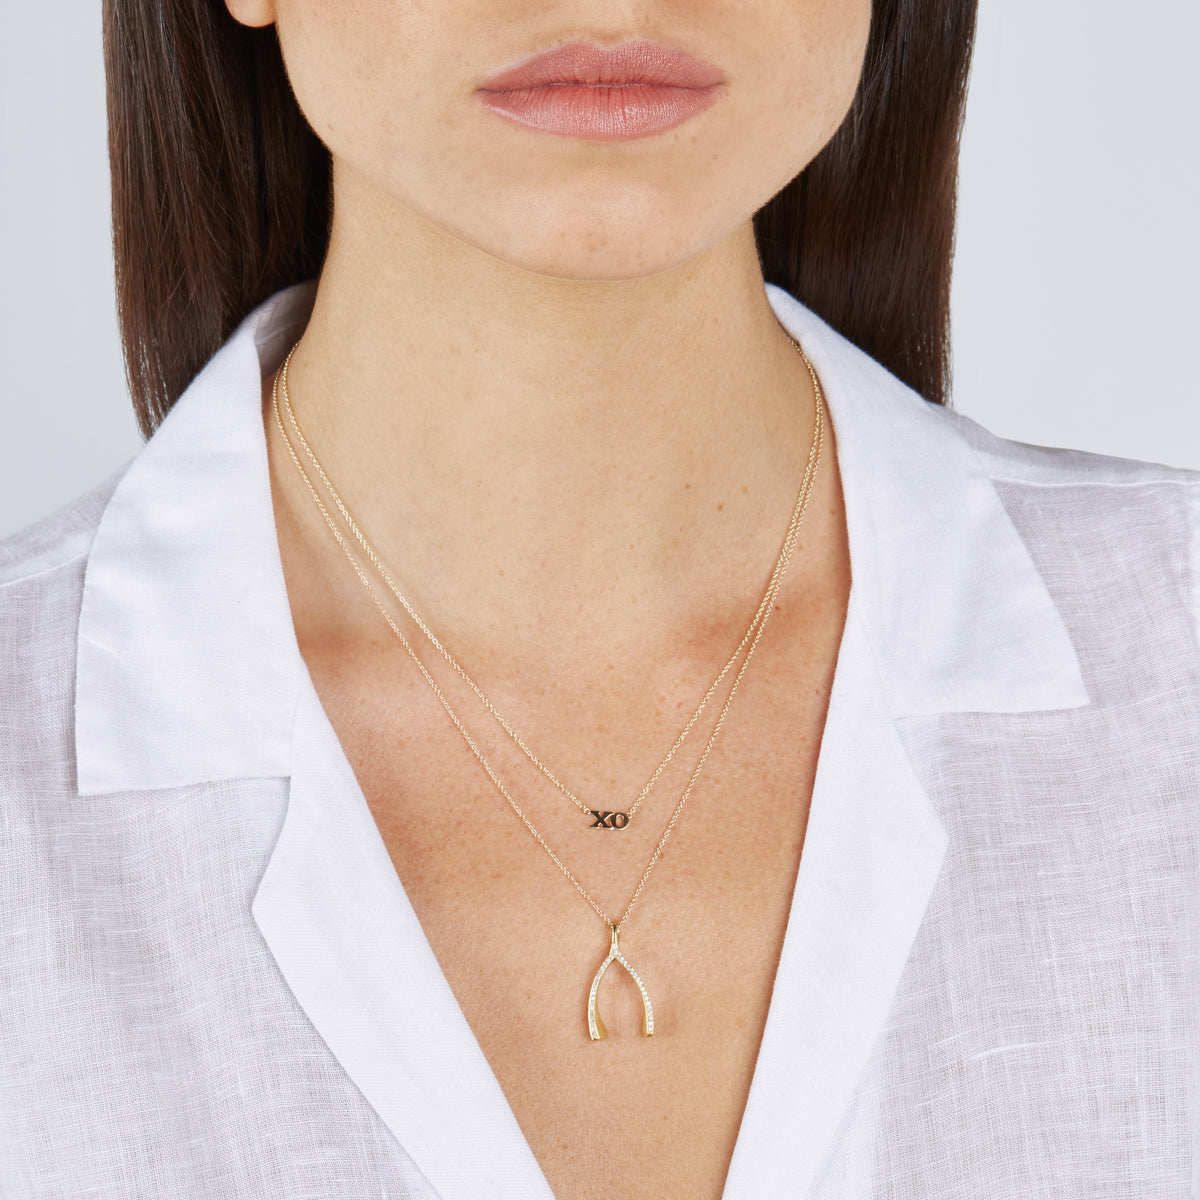 Buy XO Necklace / Tiny Initial Pendant /monogram Jewelry Online in India -  Etsy